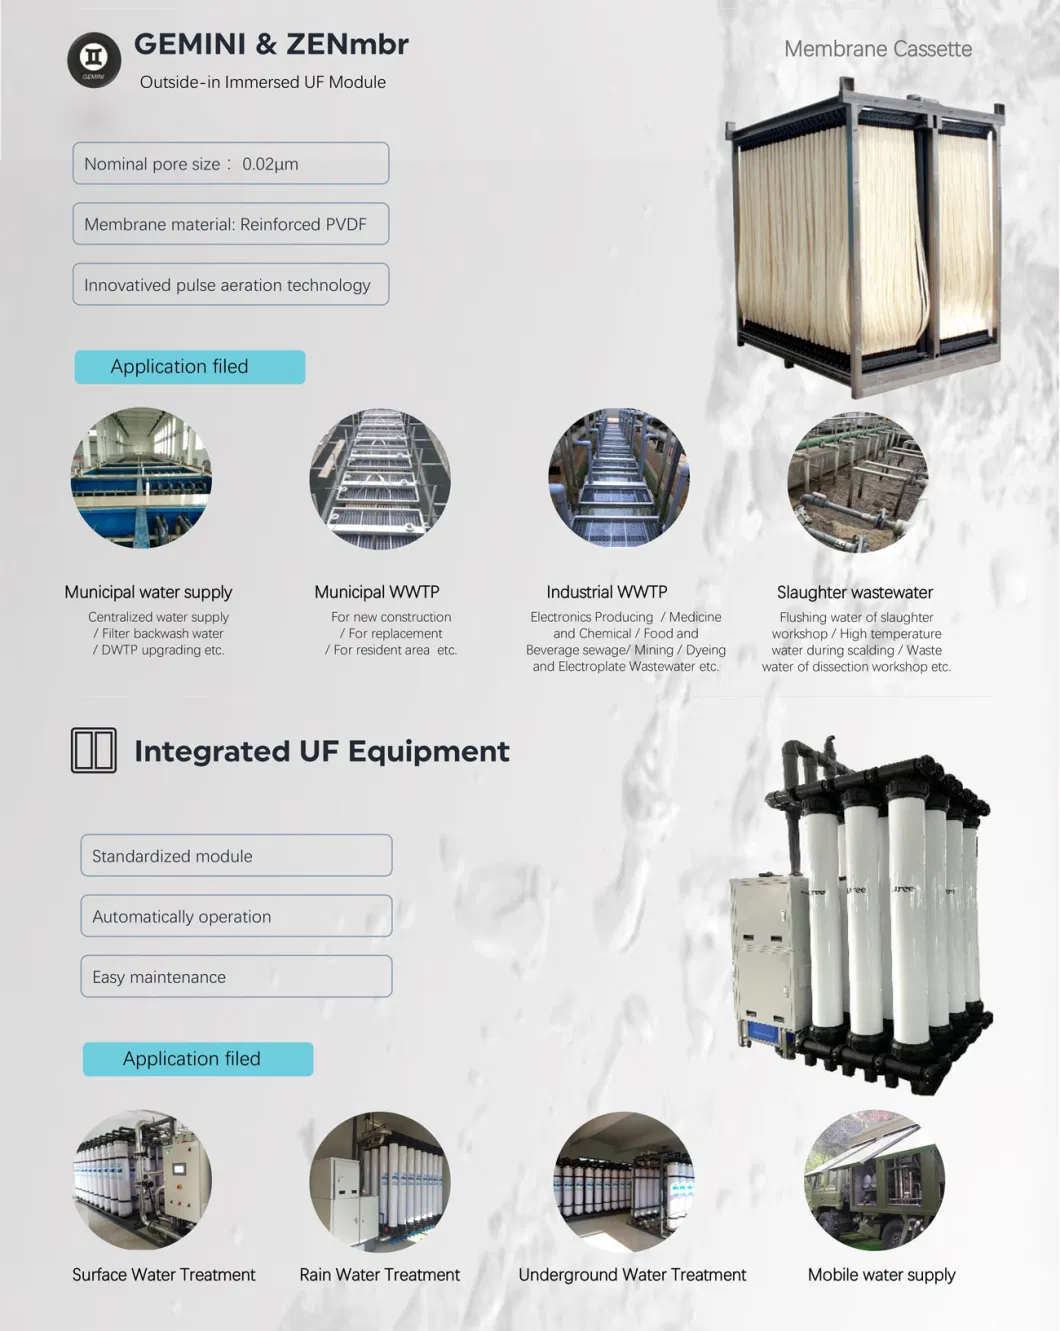 Litree Grey Water Treatment Equipment Hollow Fiber Mbr Membrane